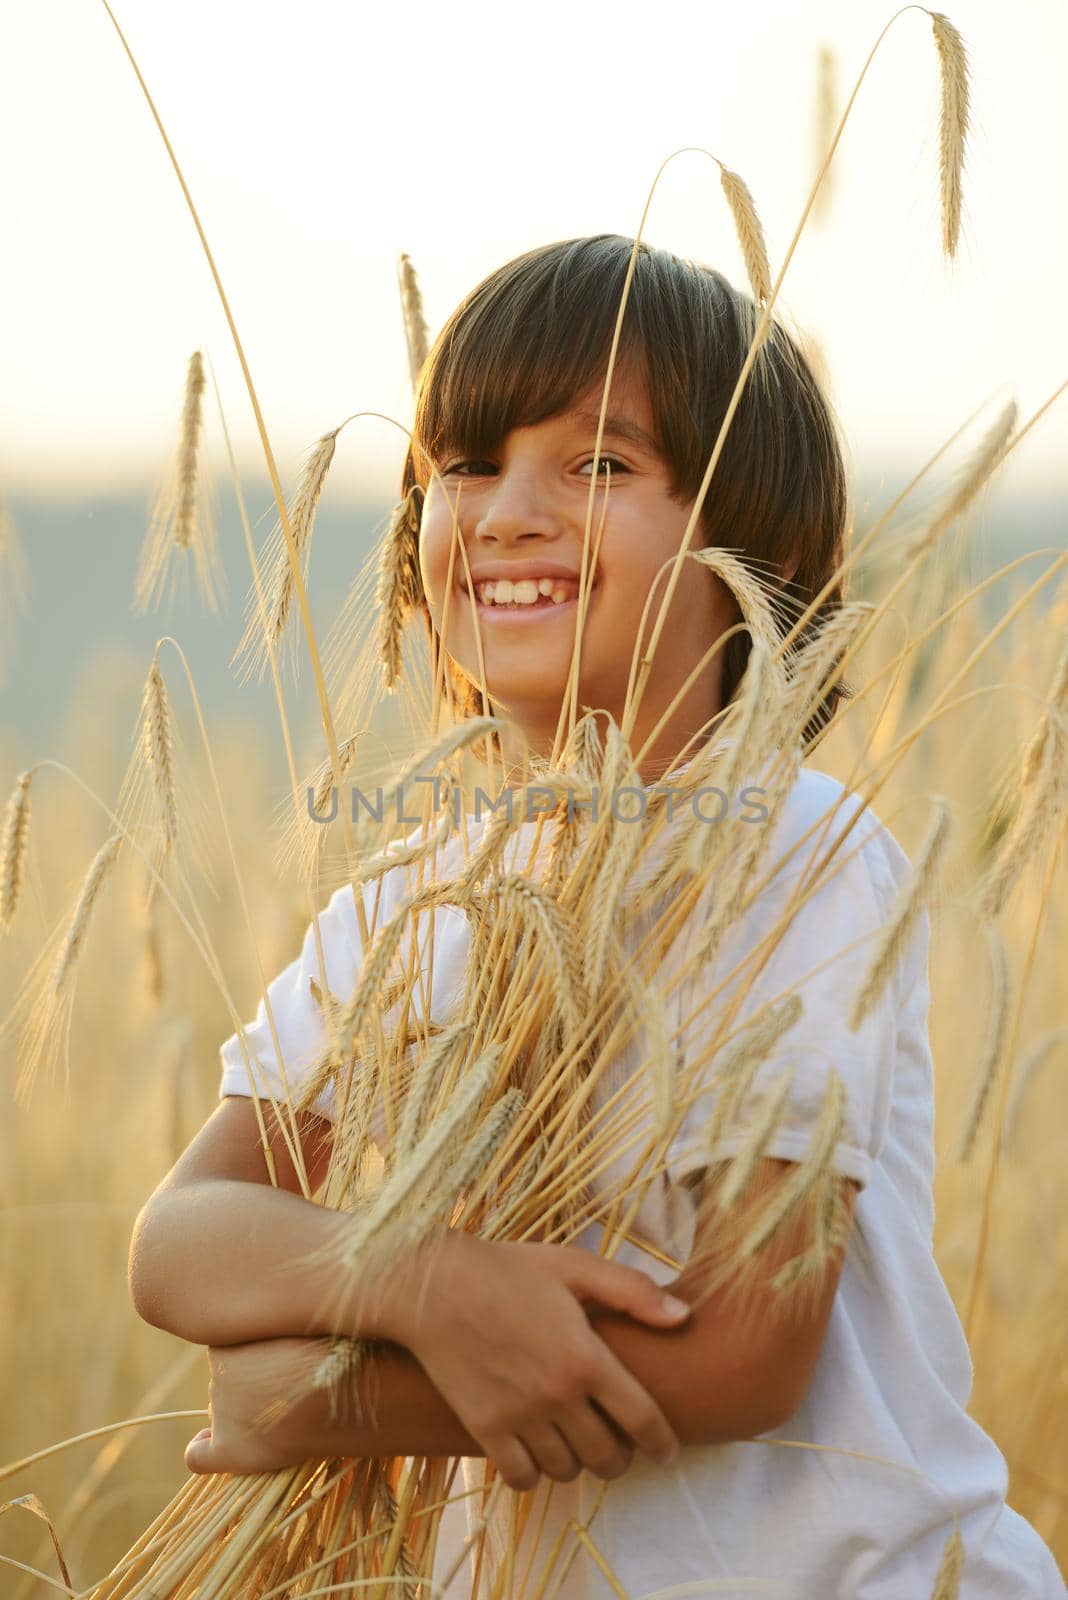 Happy child at harvest field by Zurijeta